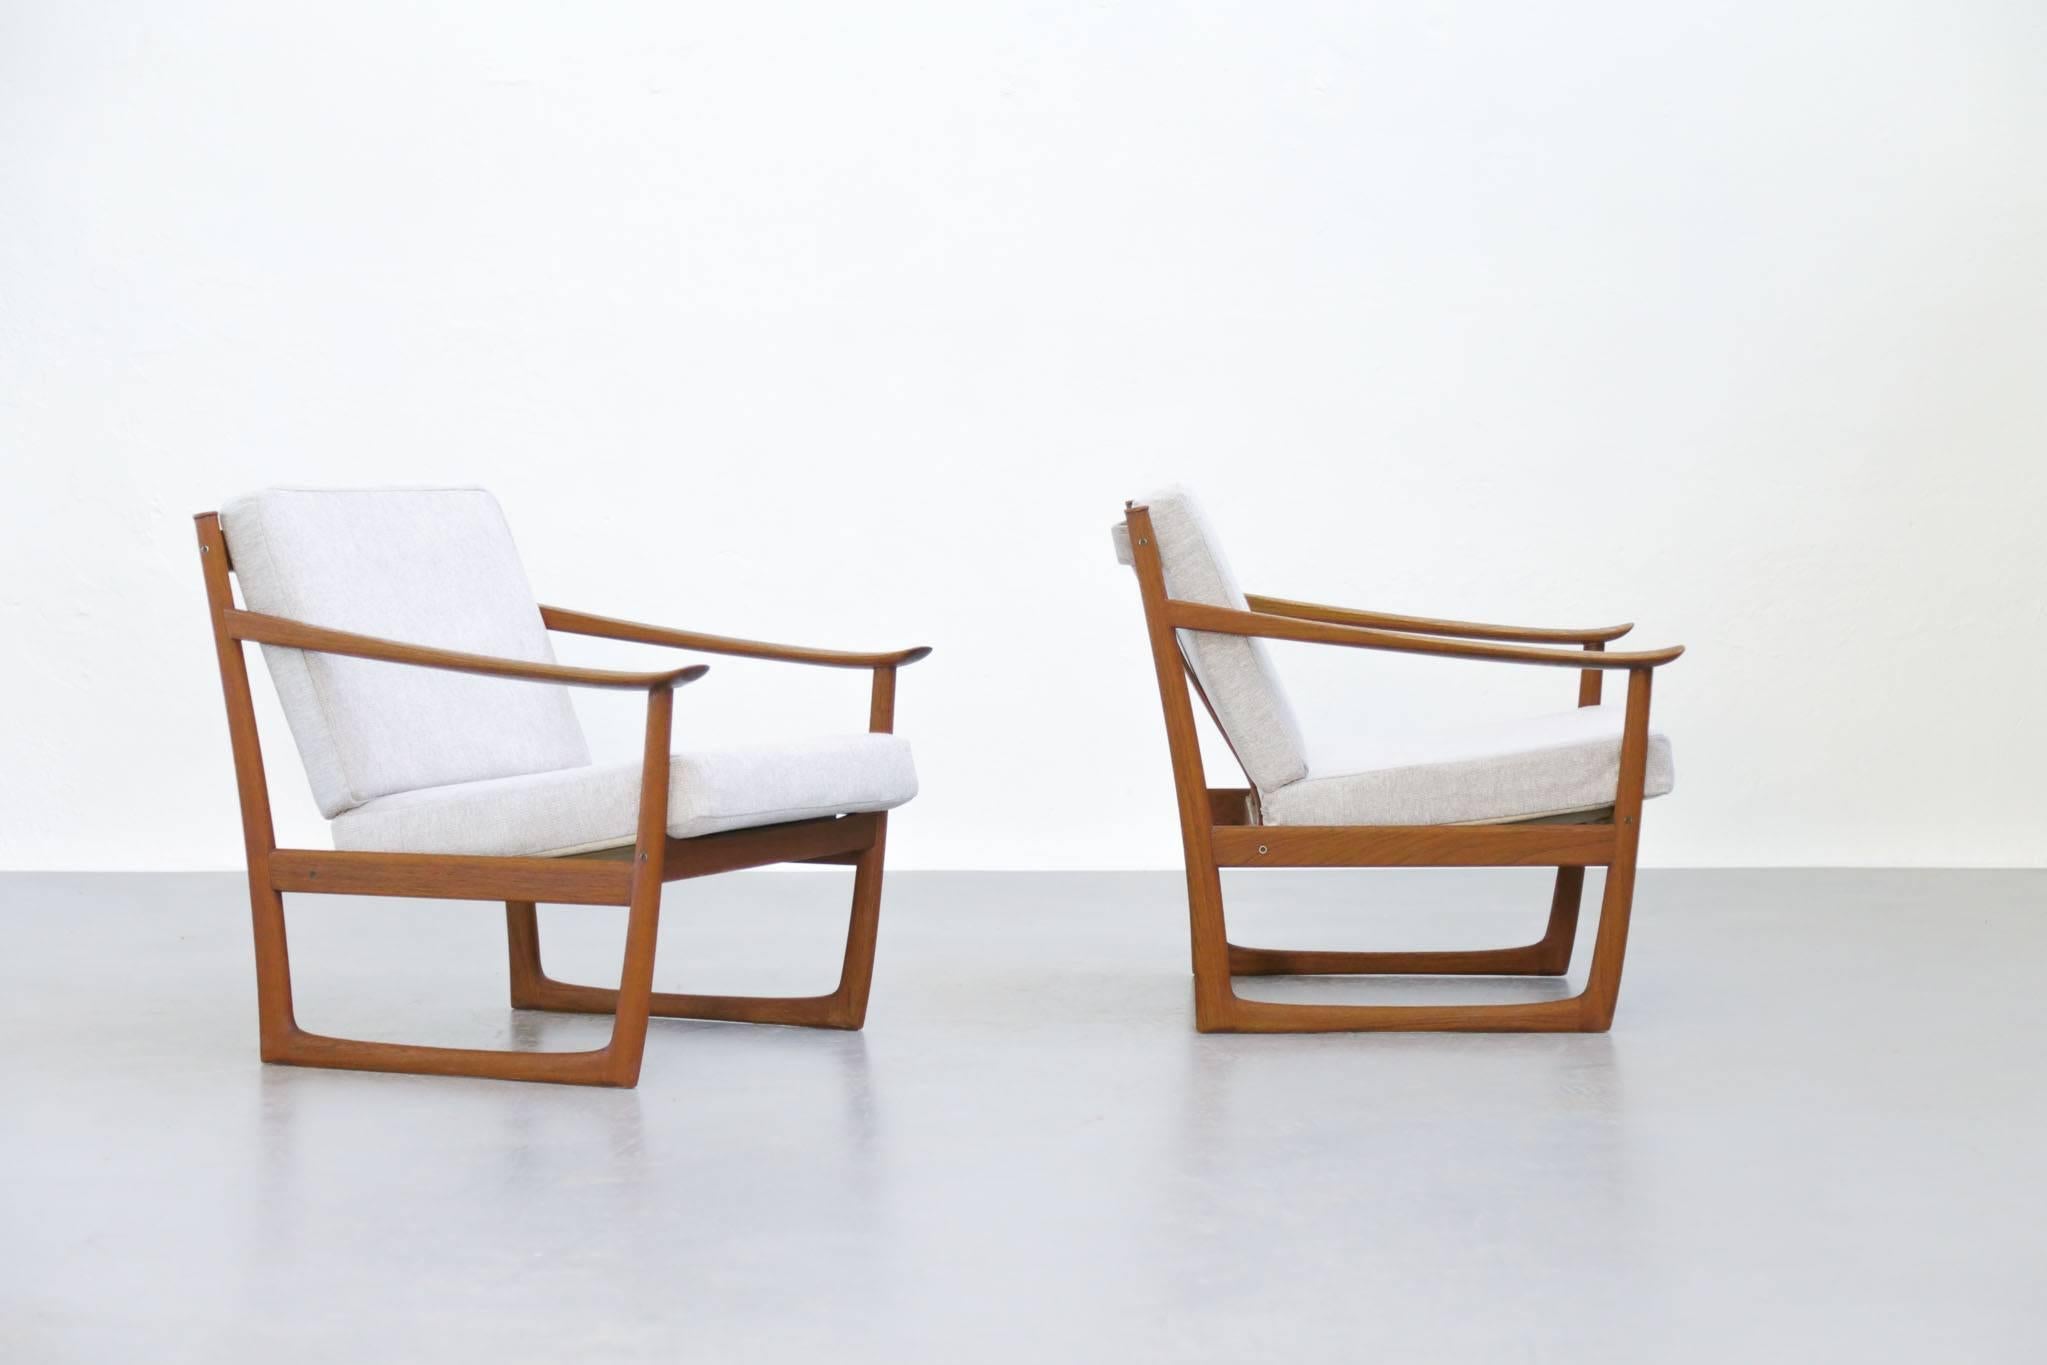 Pair of Danish Modern Lounge Chair Peter Hvidt & Orla Mølgaard FD130 1